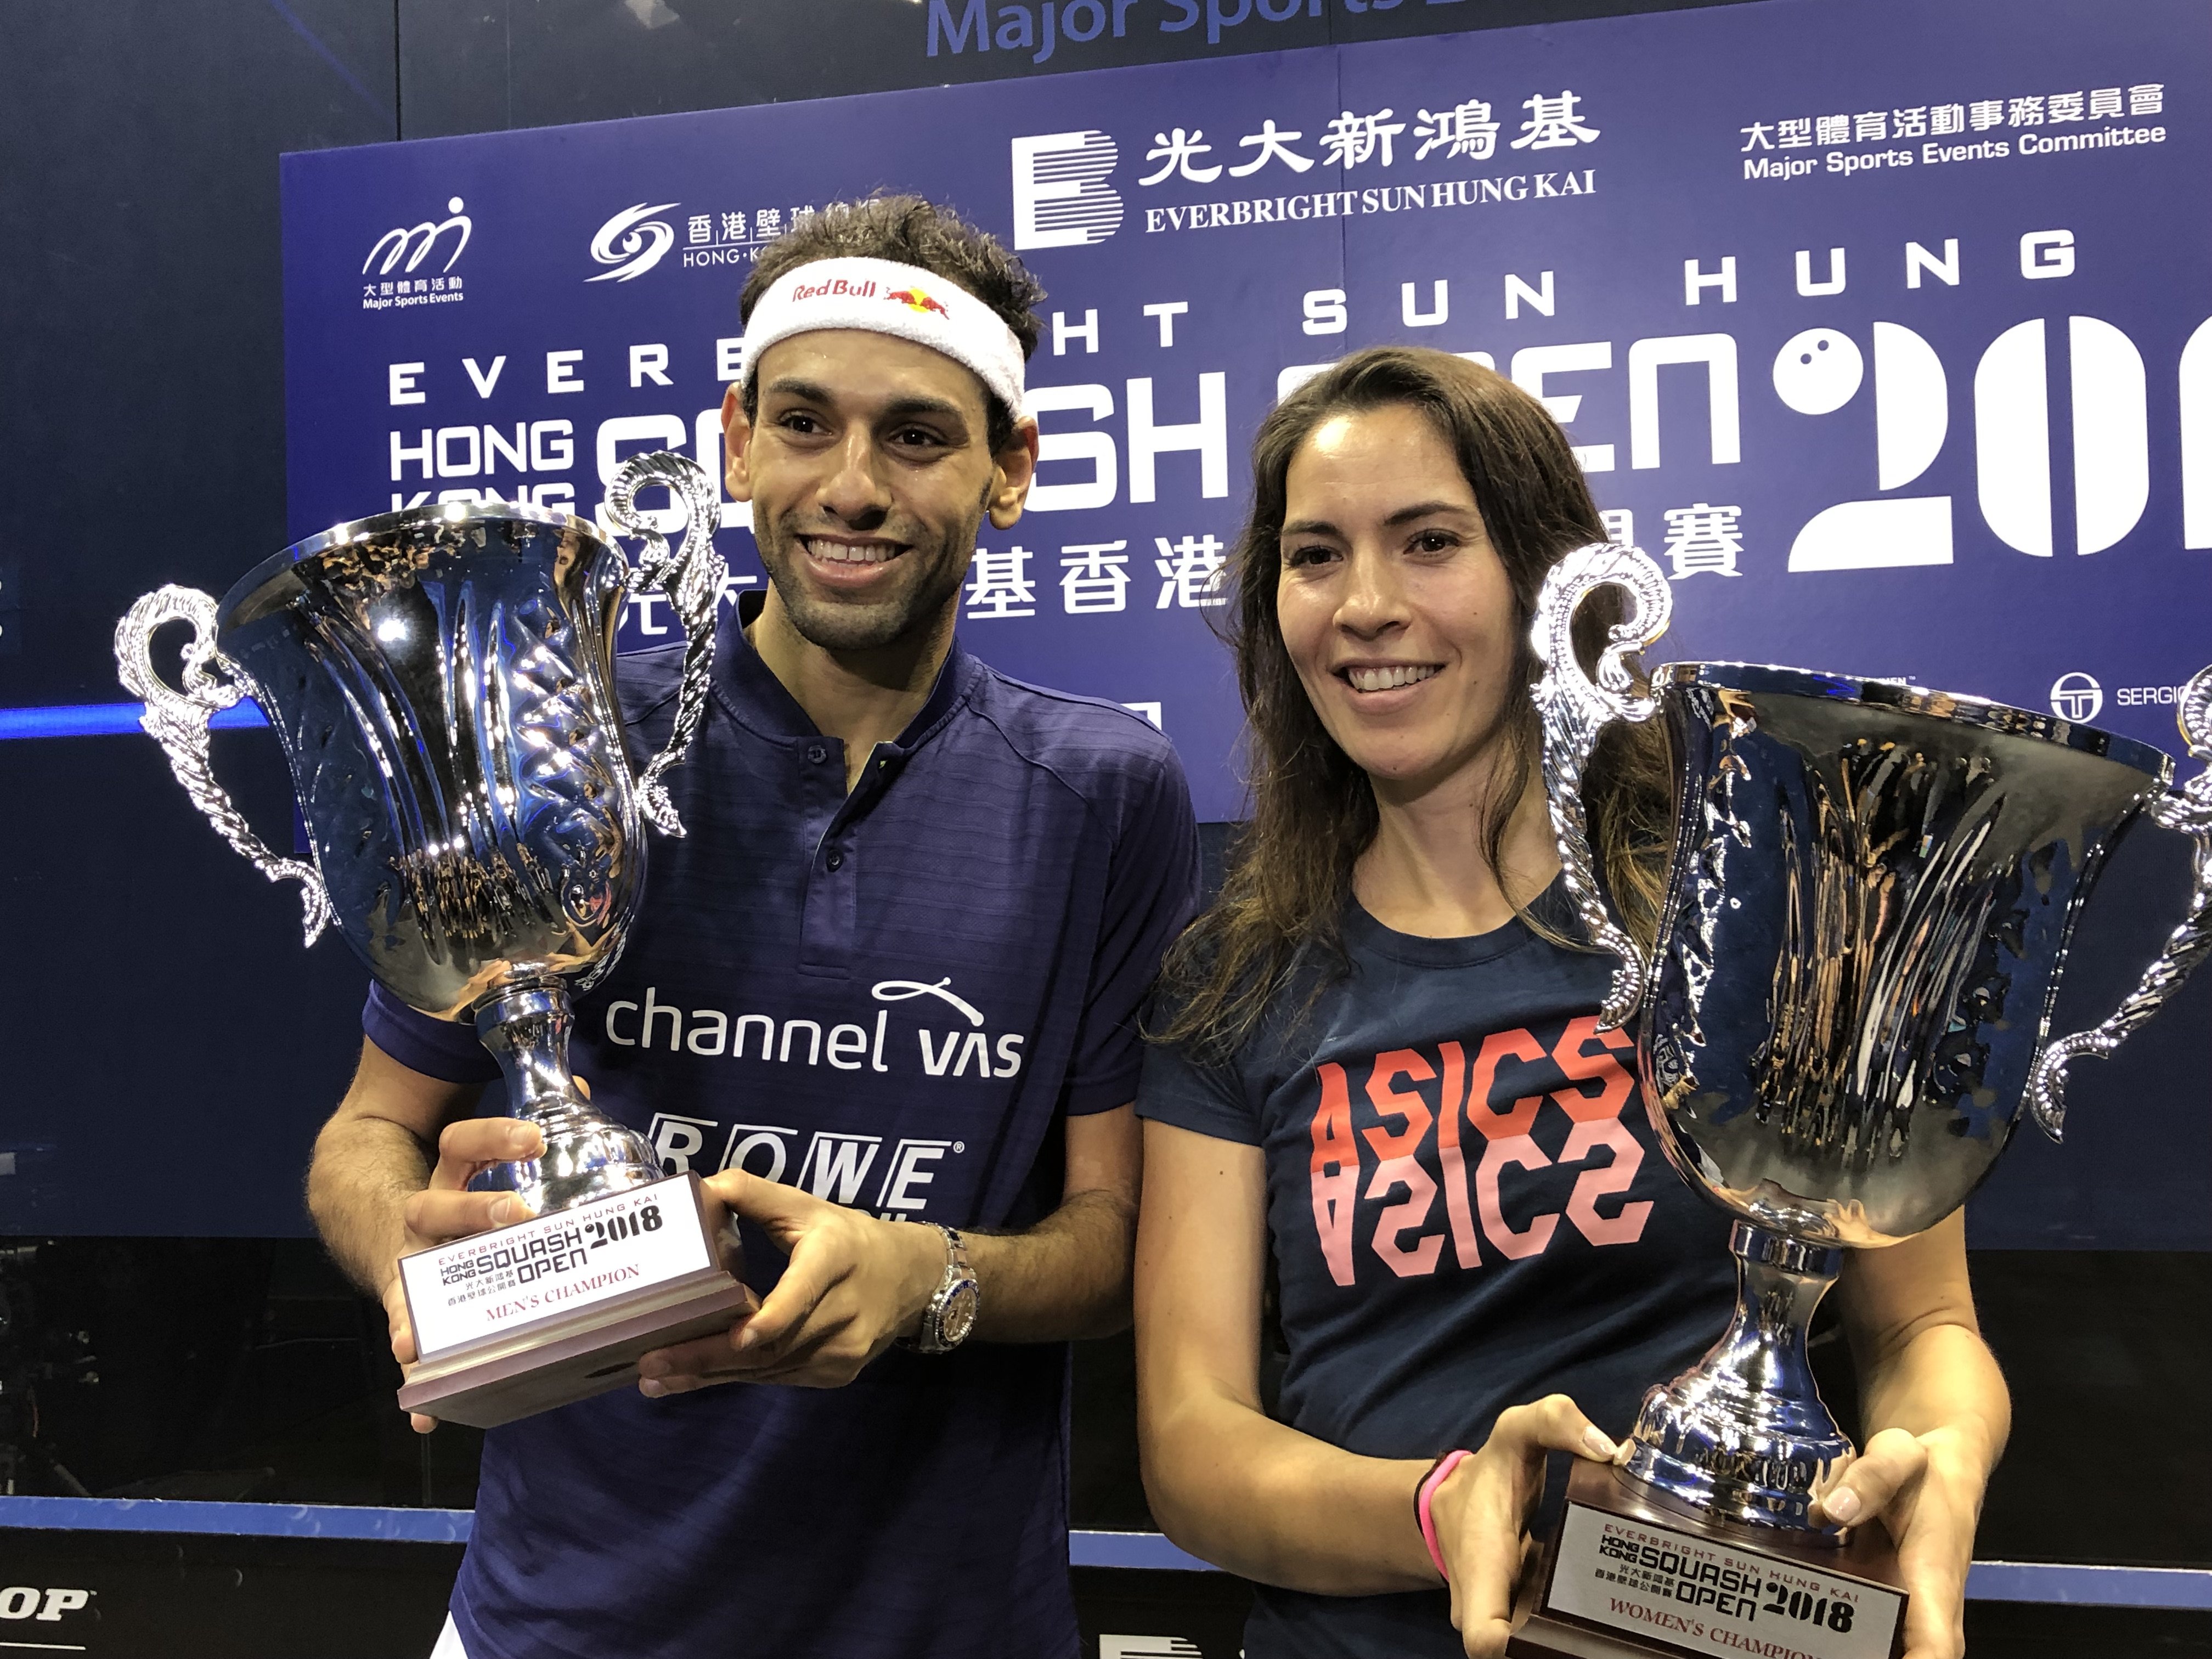 Hong Kong Squash Open 2019 champions Mohamed Elshorbagy and Joelle King. Photo: Hong Kong Squash